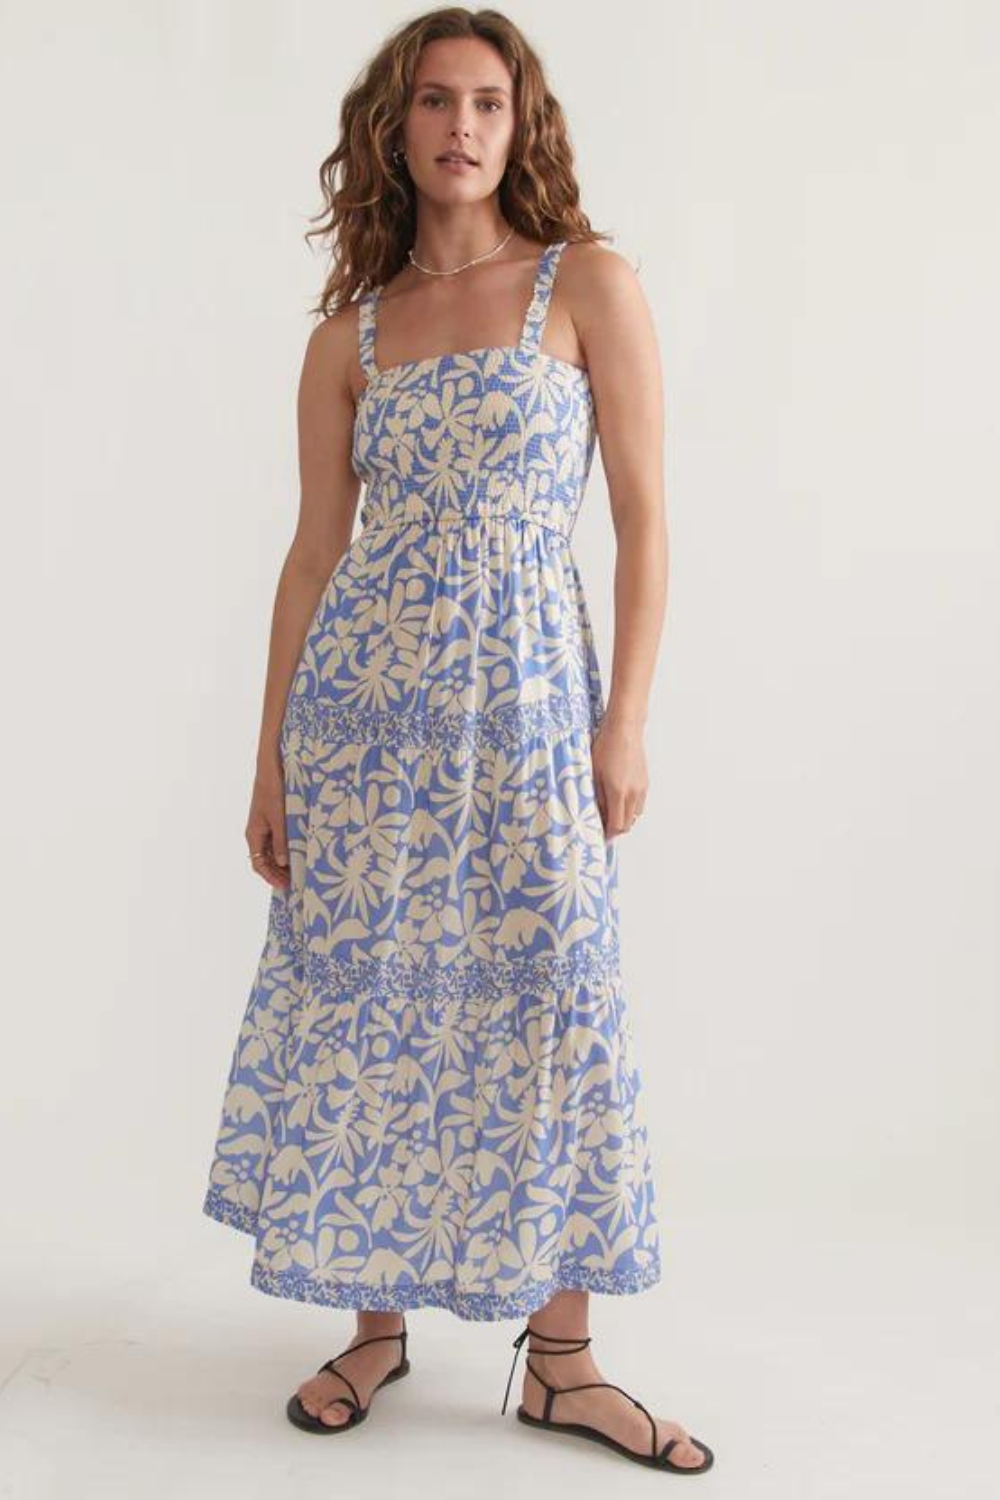 Marine Layer Print Mixing Selene Maxi Dress - Twilight Blue Flora